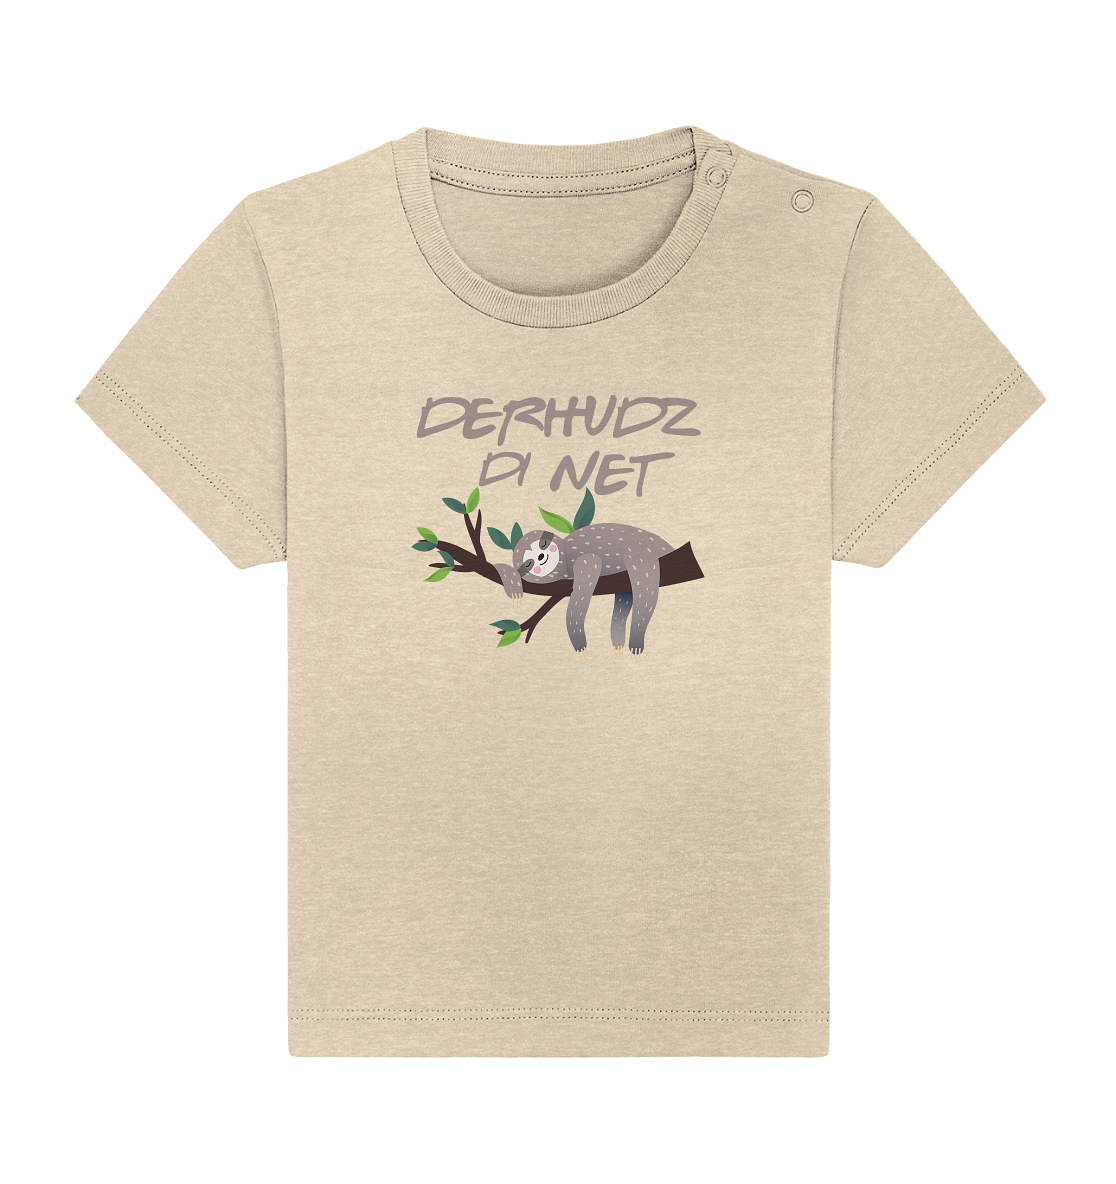 #BABY - DERHUDZ DI NET - Baby Organic Shirt